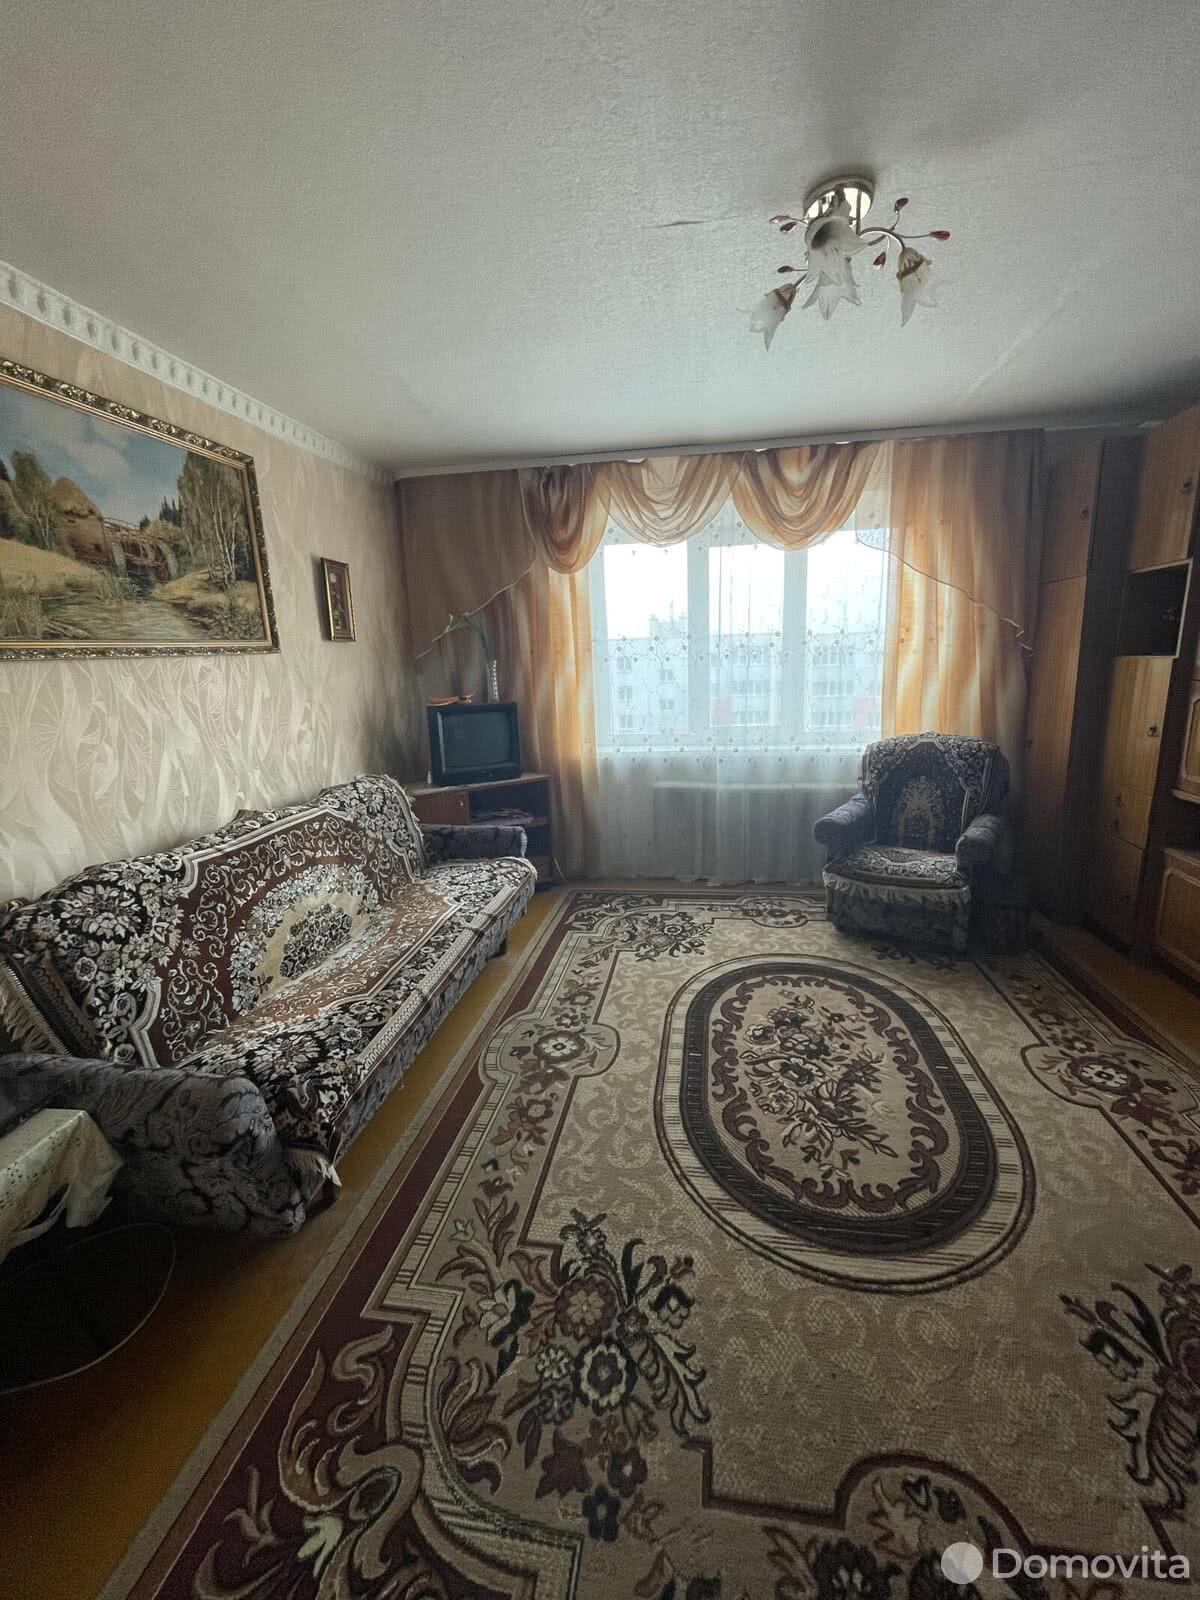 Цена продажи квартиры, Горки, ул. Калинина, д. 31